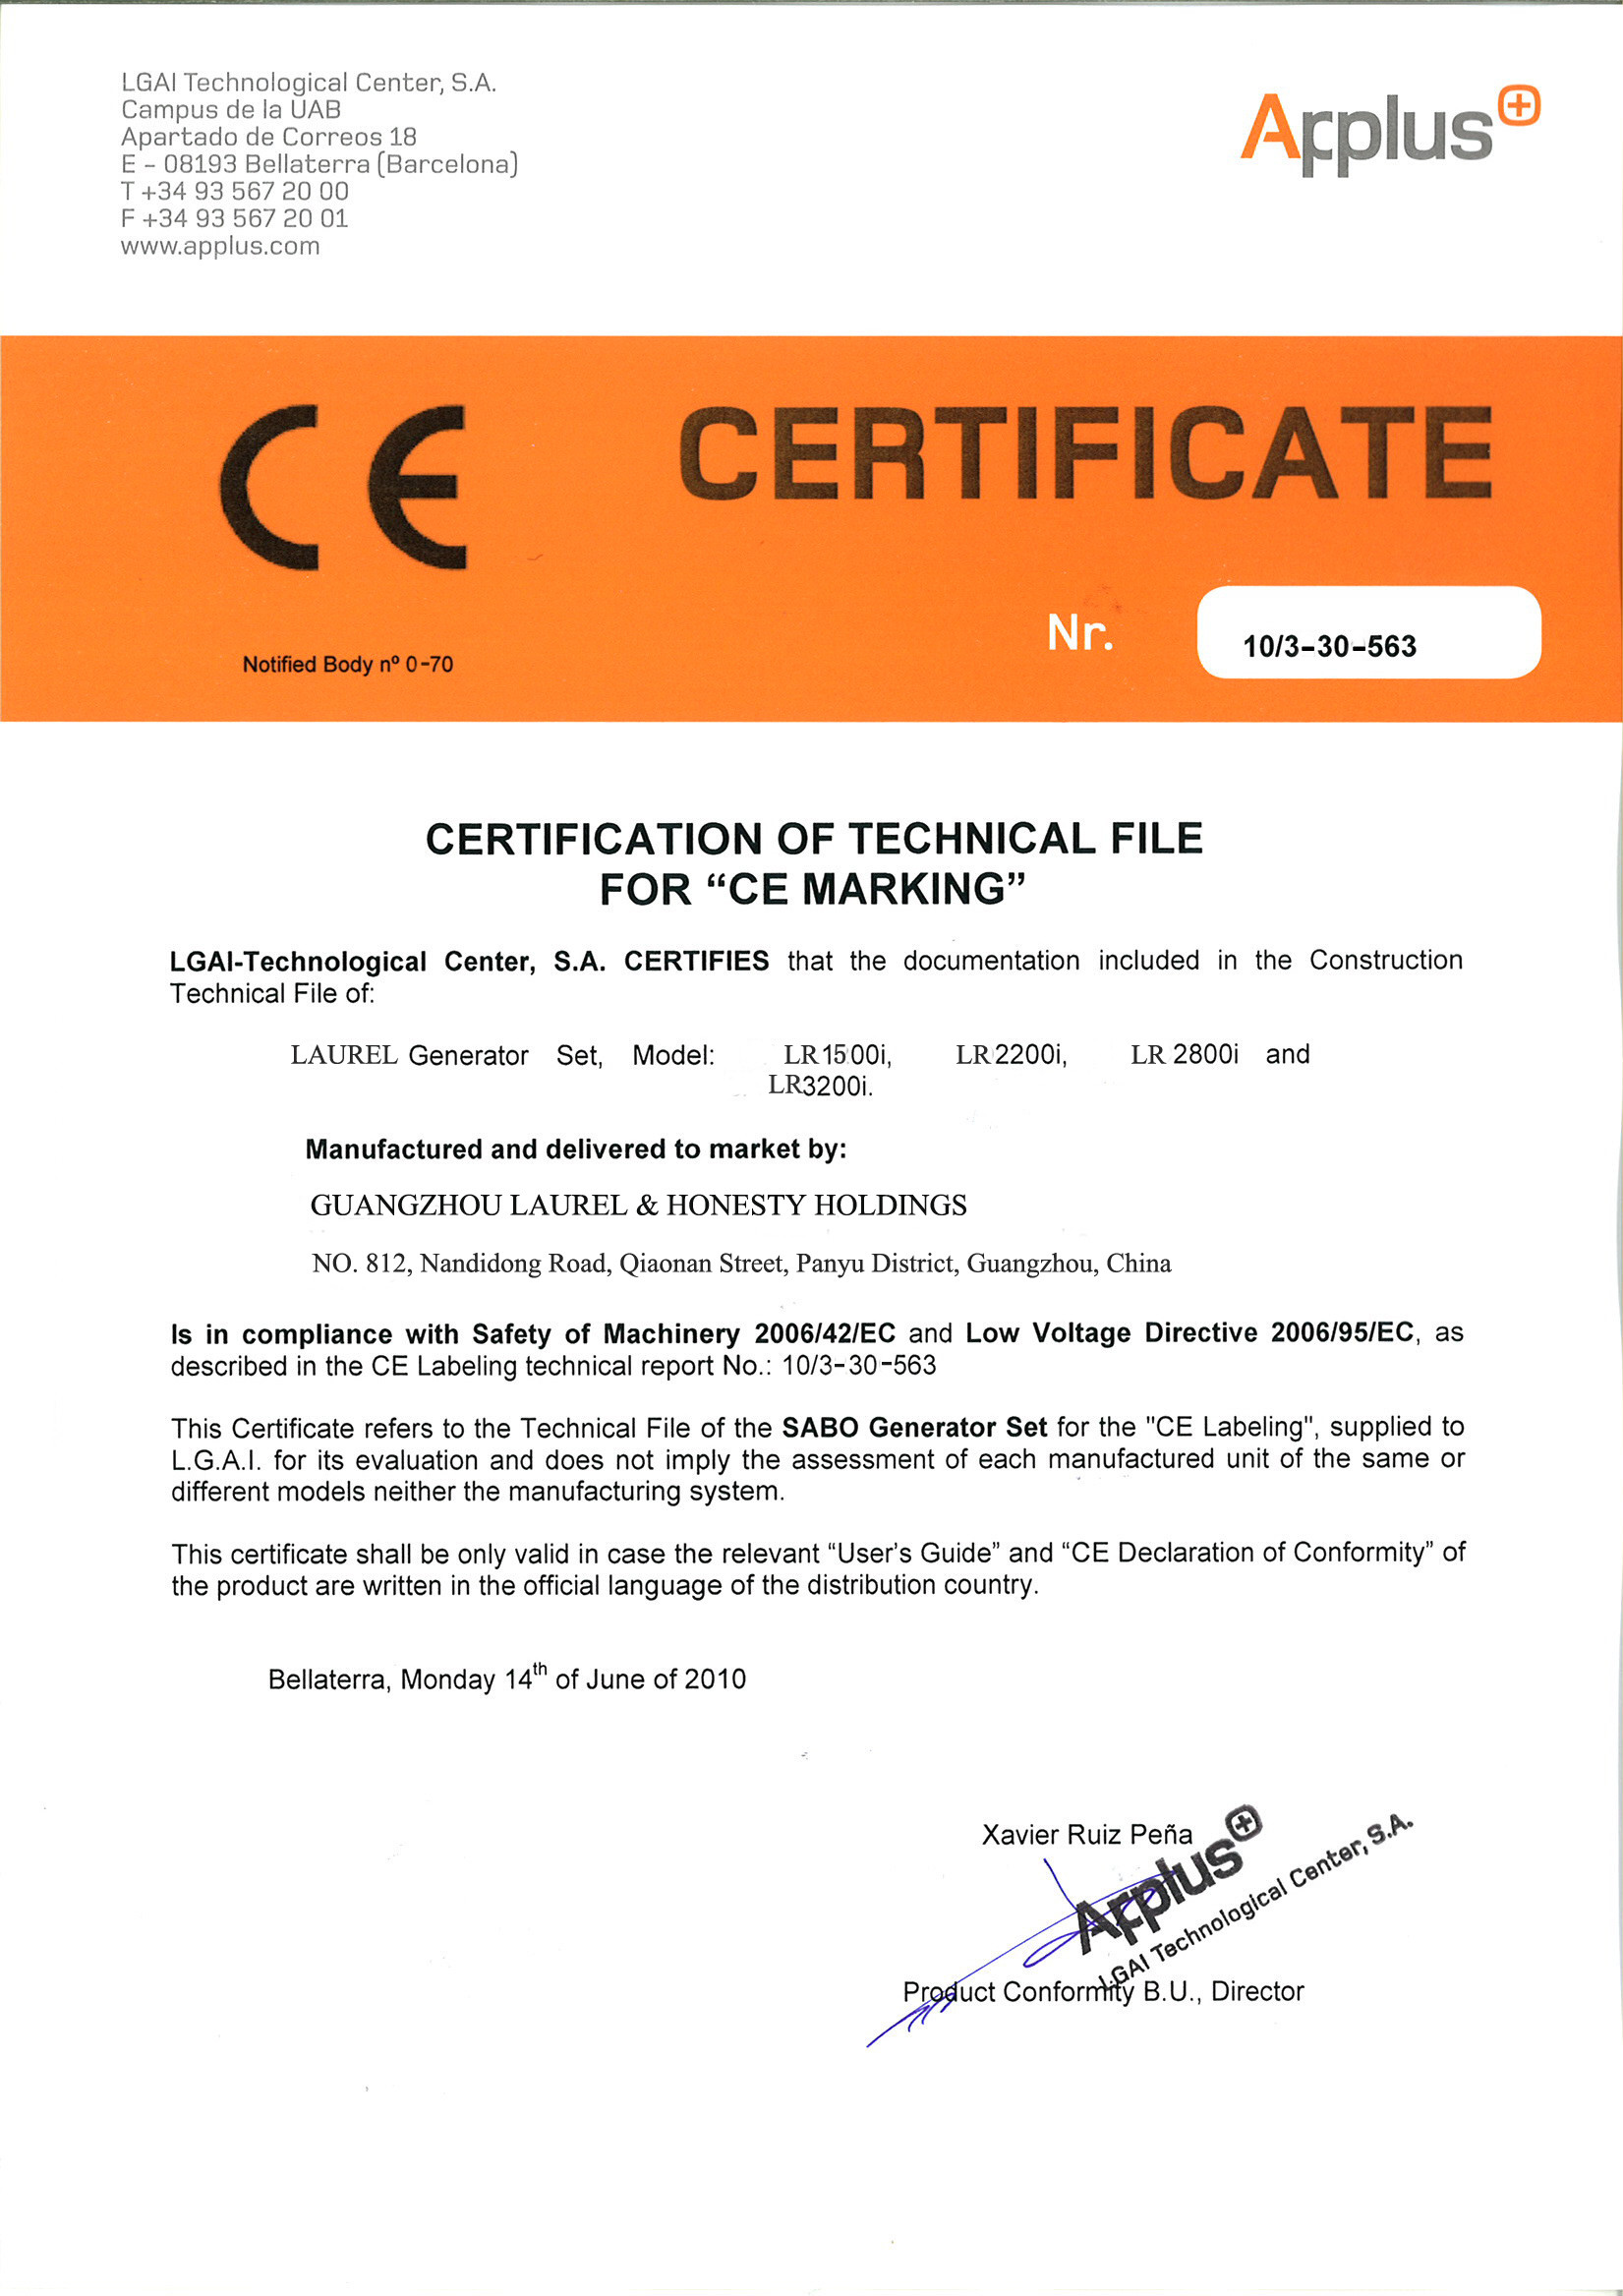 Guangzhou Laurel & Honesty Holdings Certifications